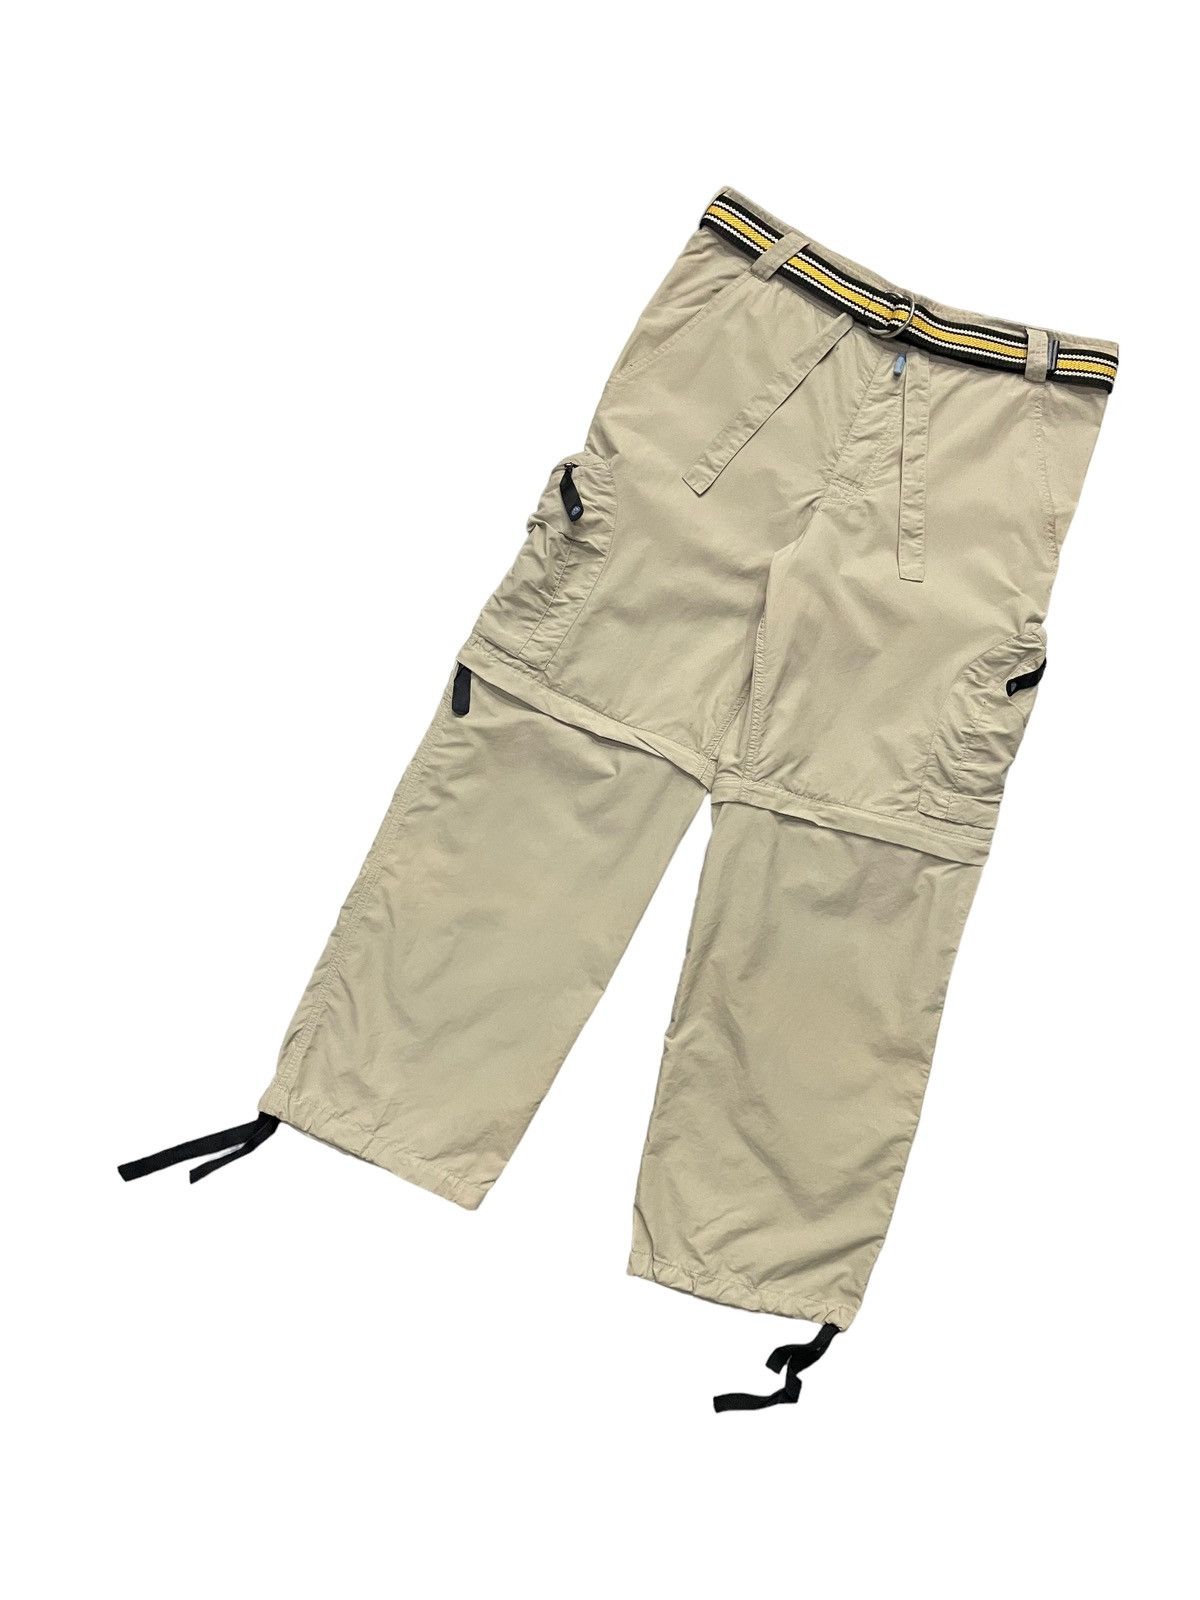 Vintage Vintage Nike ACG Convertible Trail Cargo Pants With Belt Size US 32 / EU 48 - 5 Thumbnail